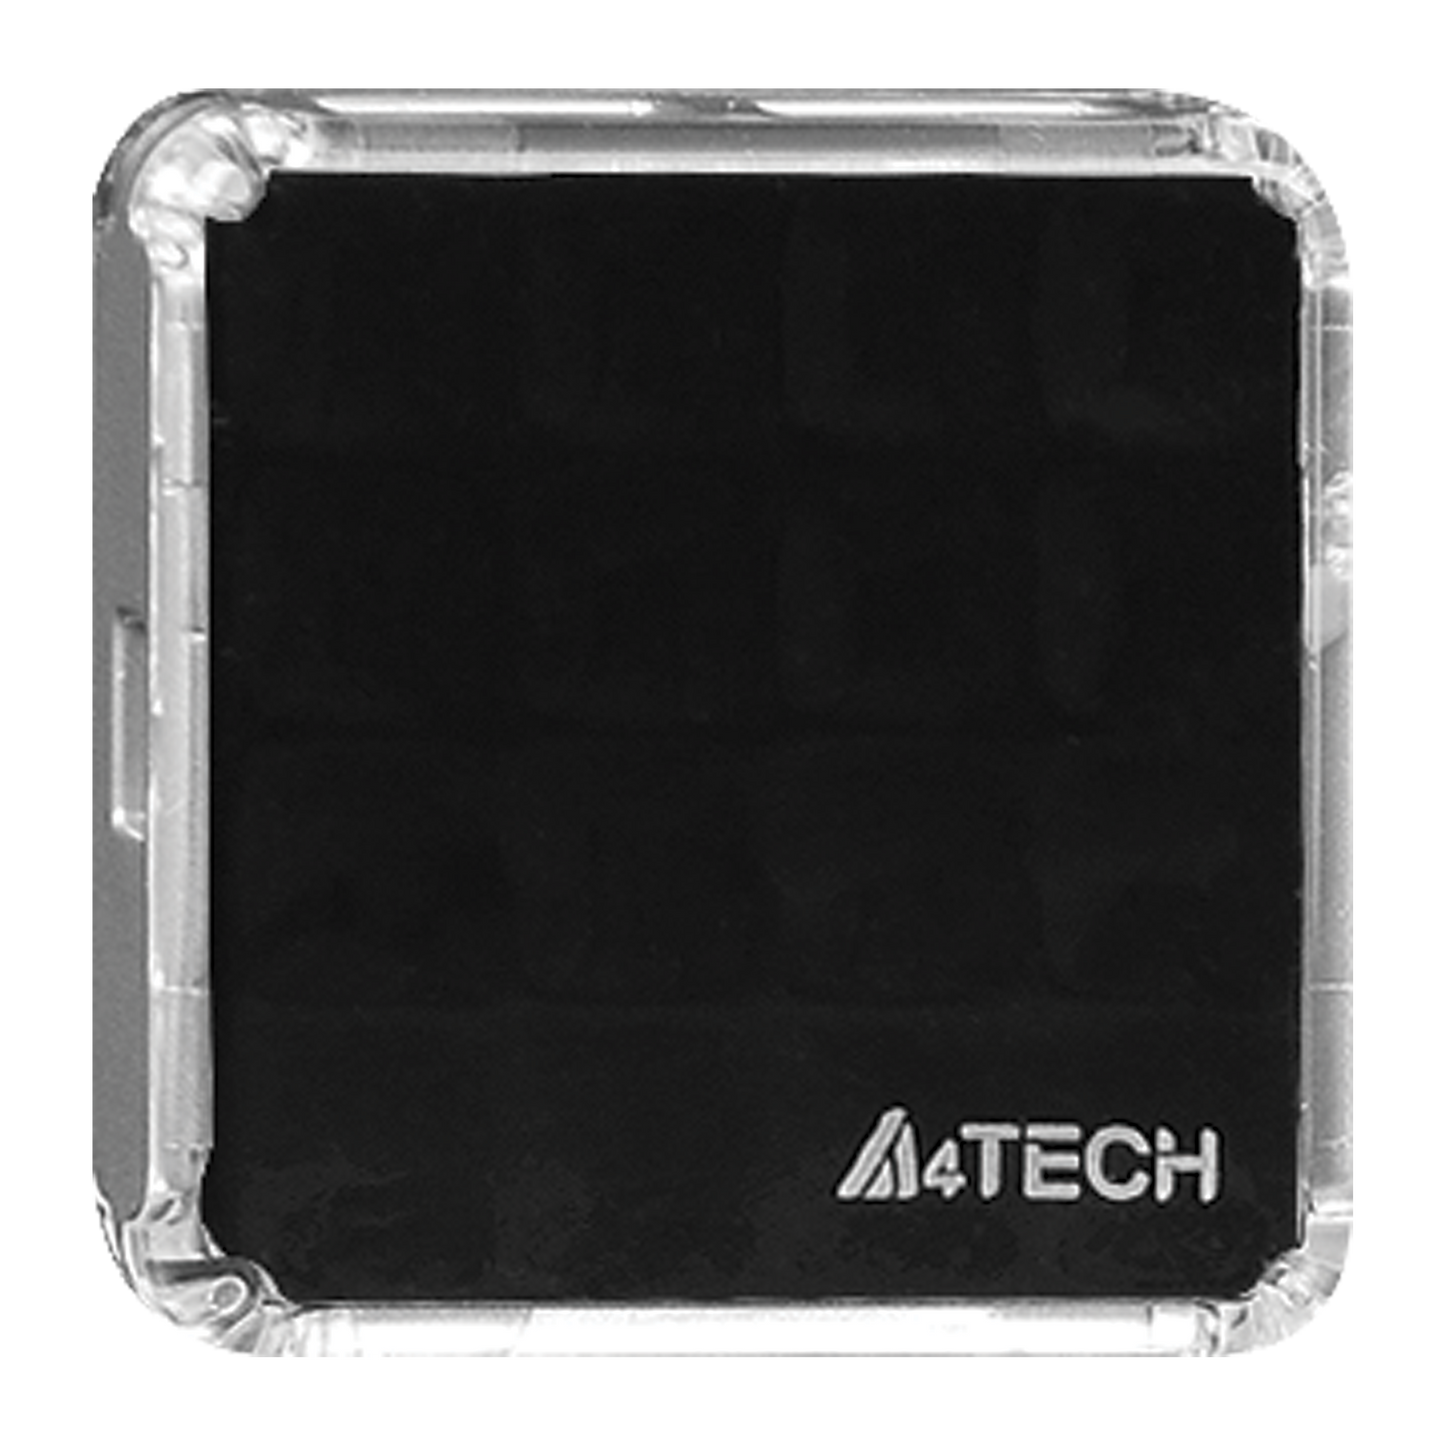 A4tech USB 4-Ports Pocket Hub HUB-56